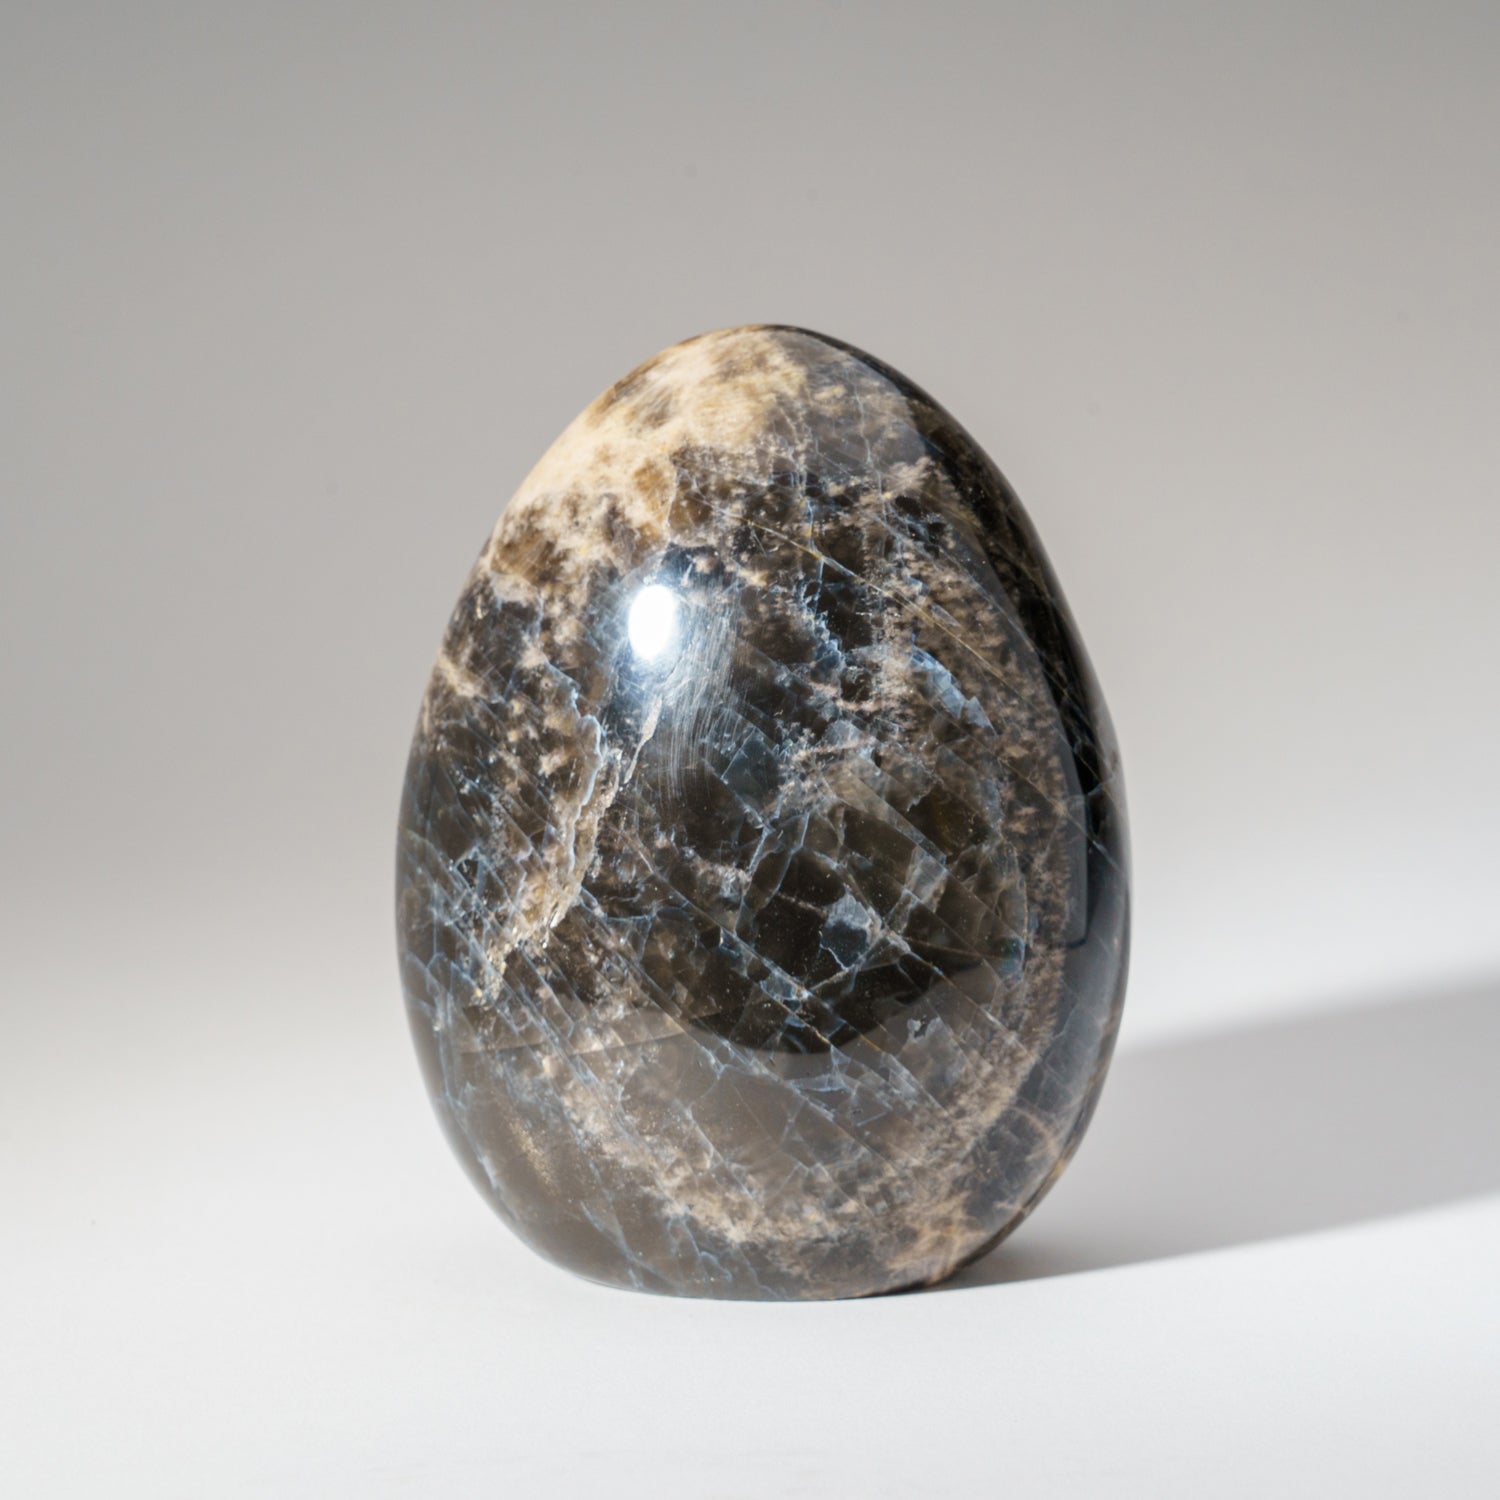 Genuine Polished Black Moonstone Freeform From Madagascar (2.1 lbs)